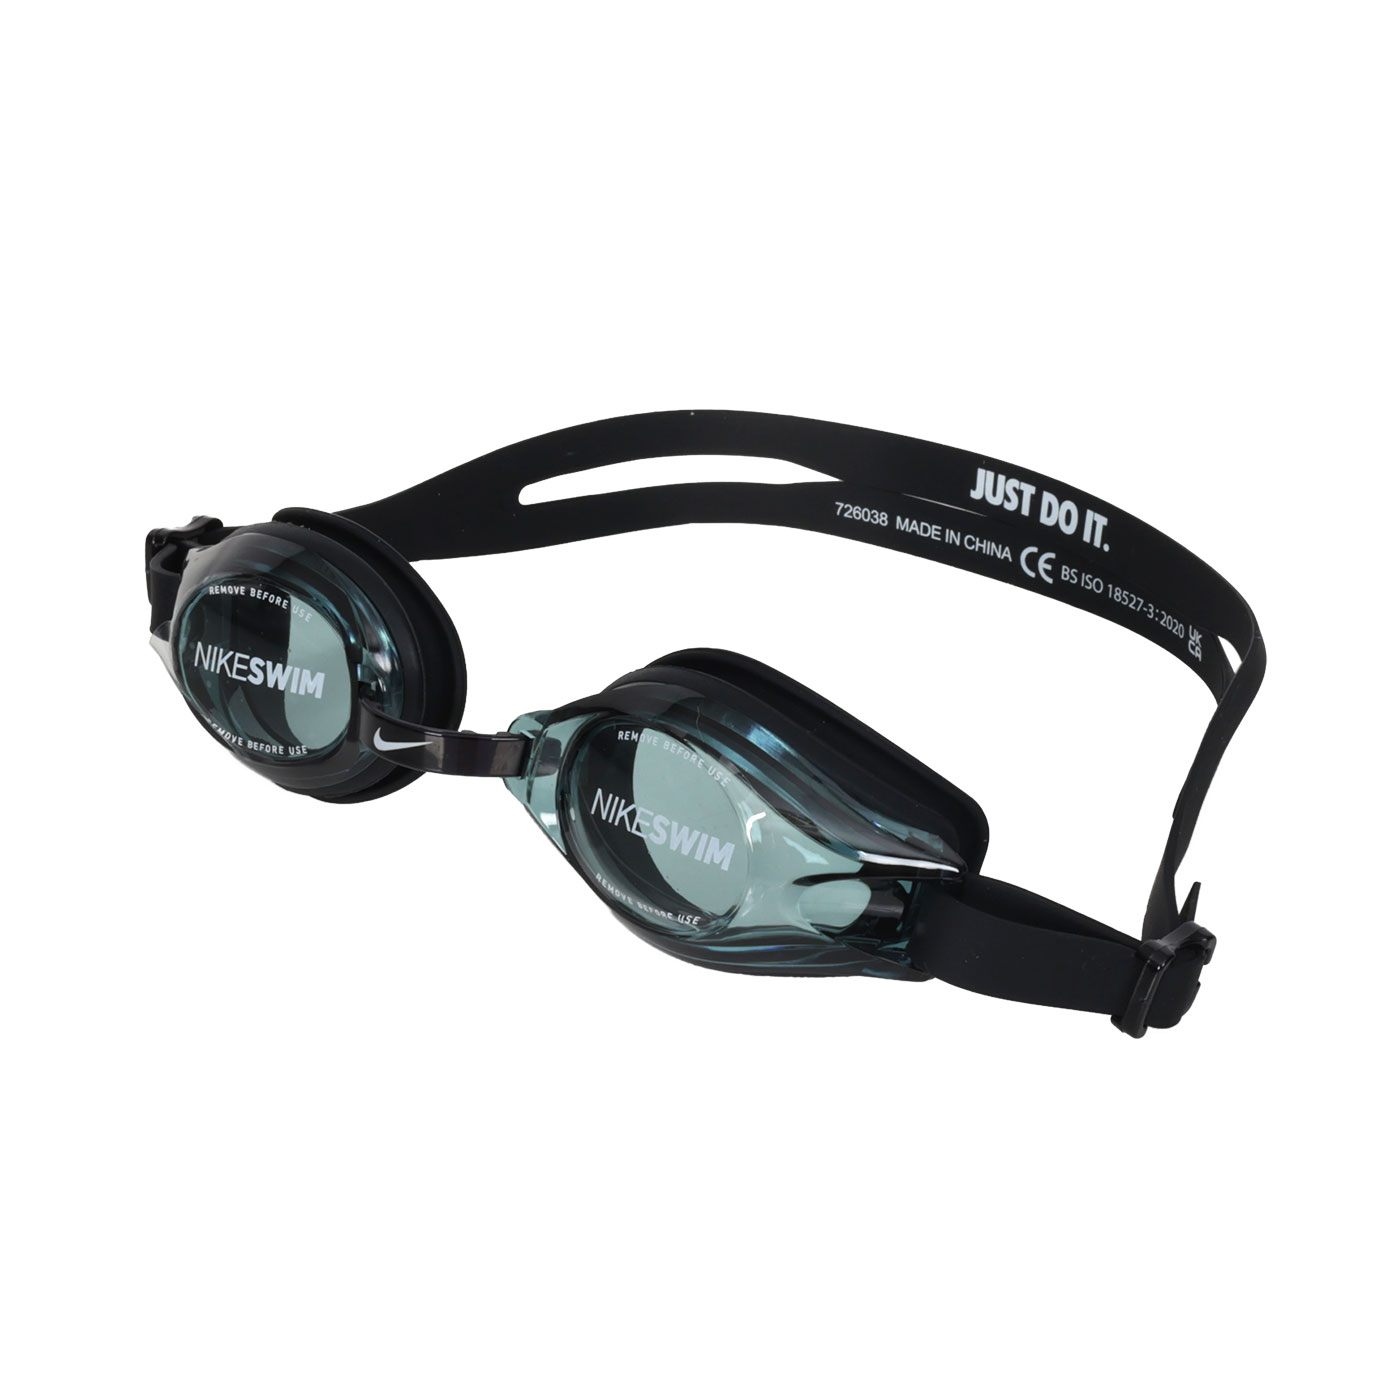 NIKE SWIM 基本訓練型泳鏡  NESSC169-007 - 黑白